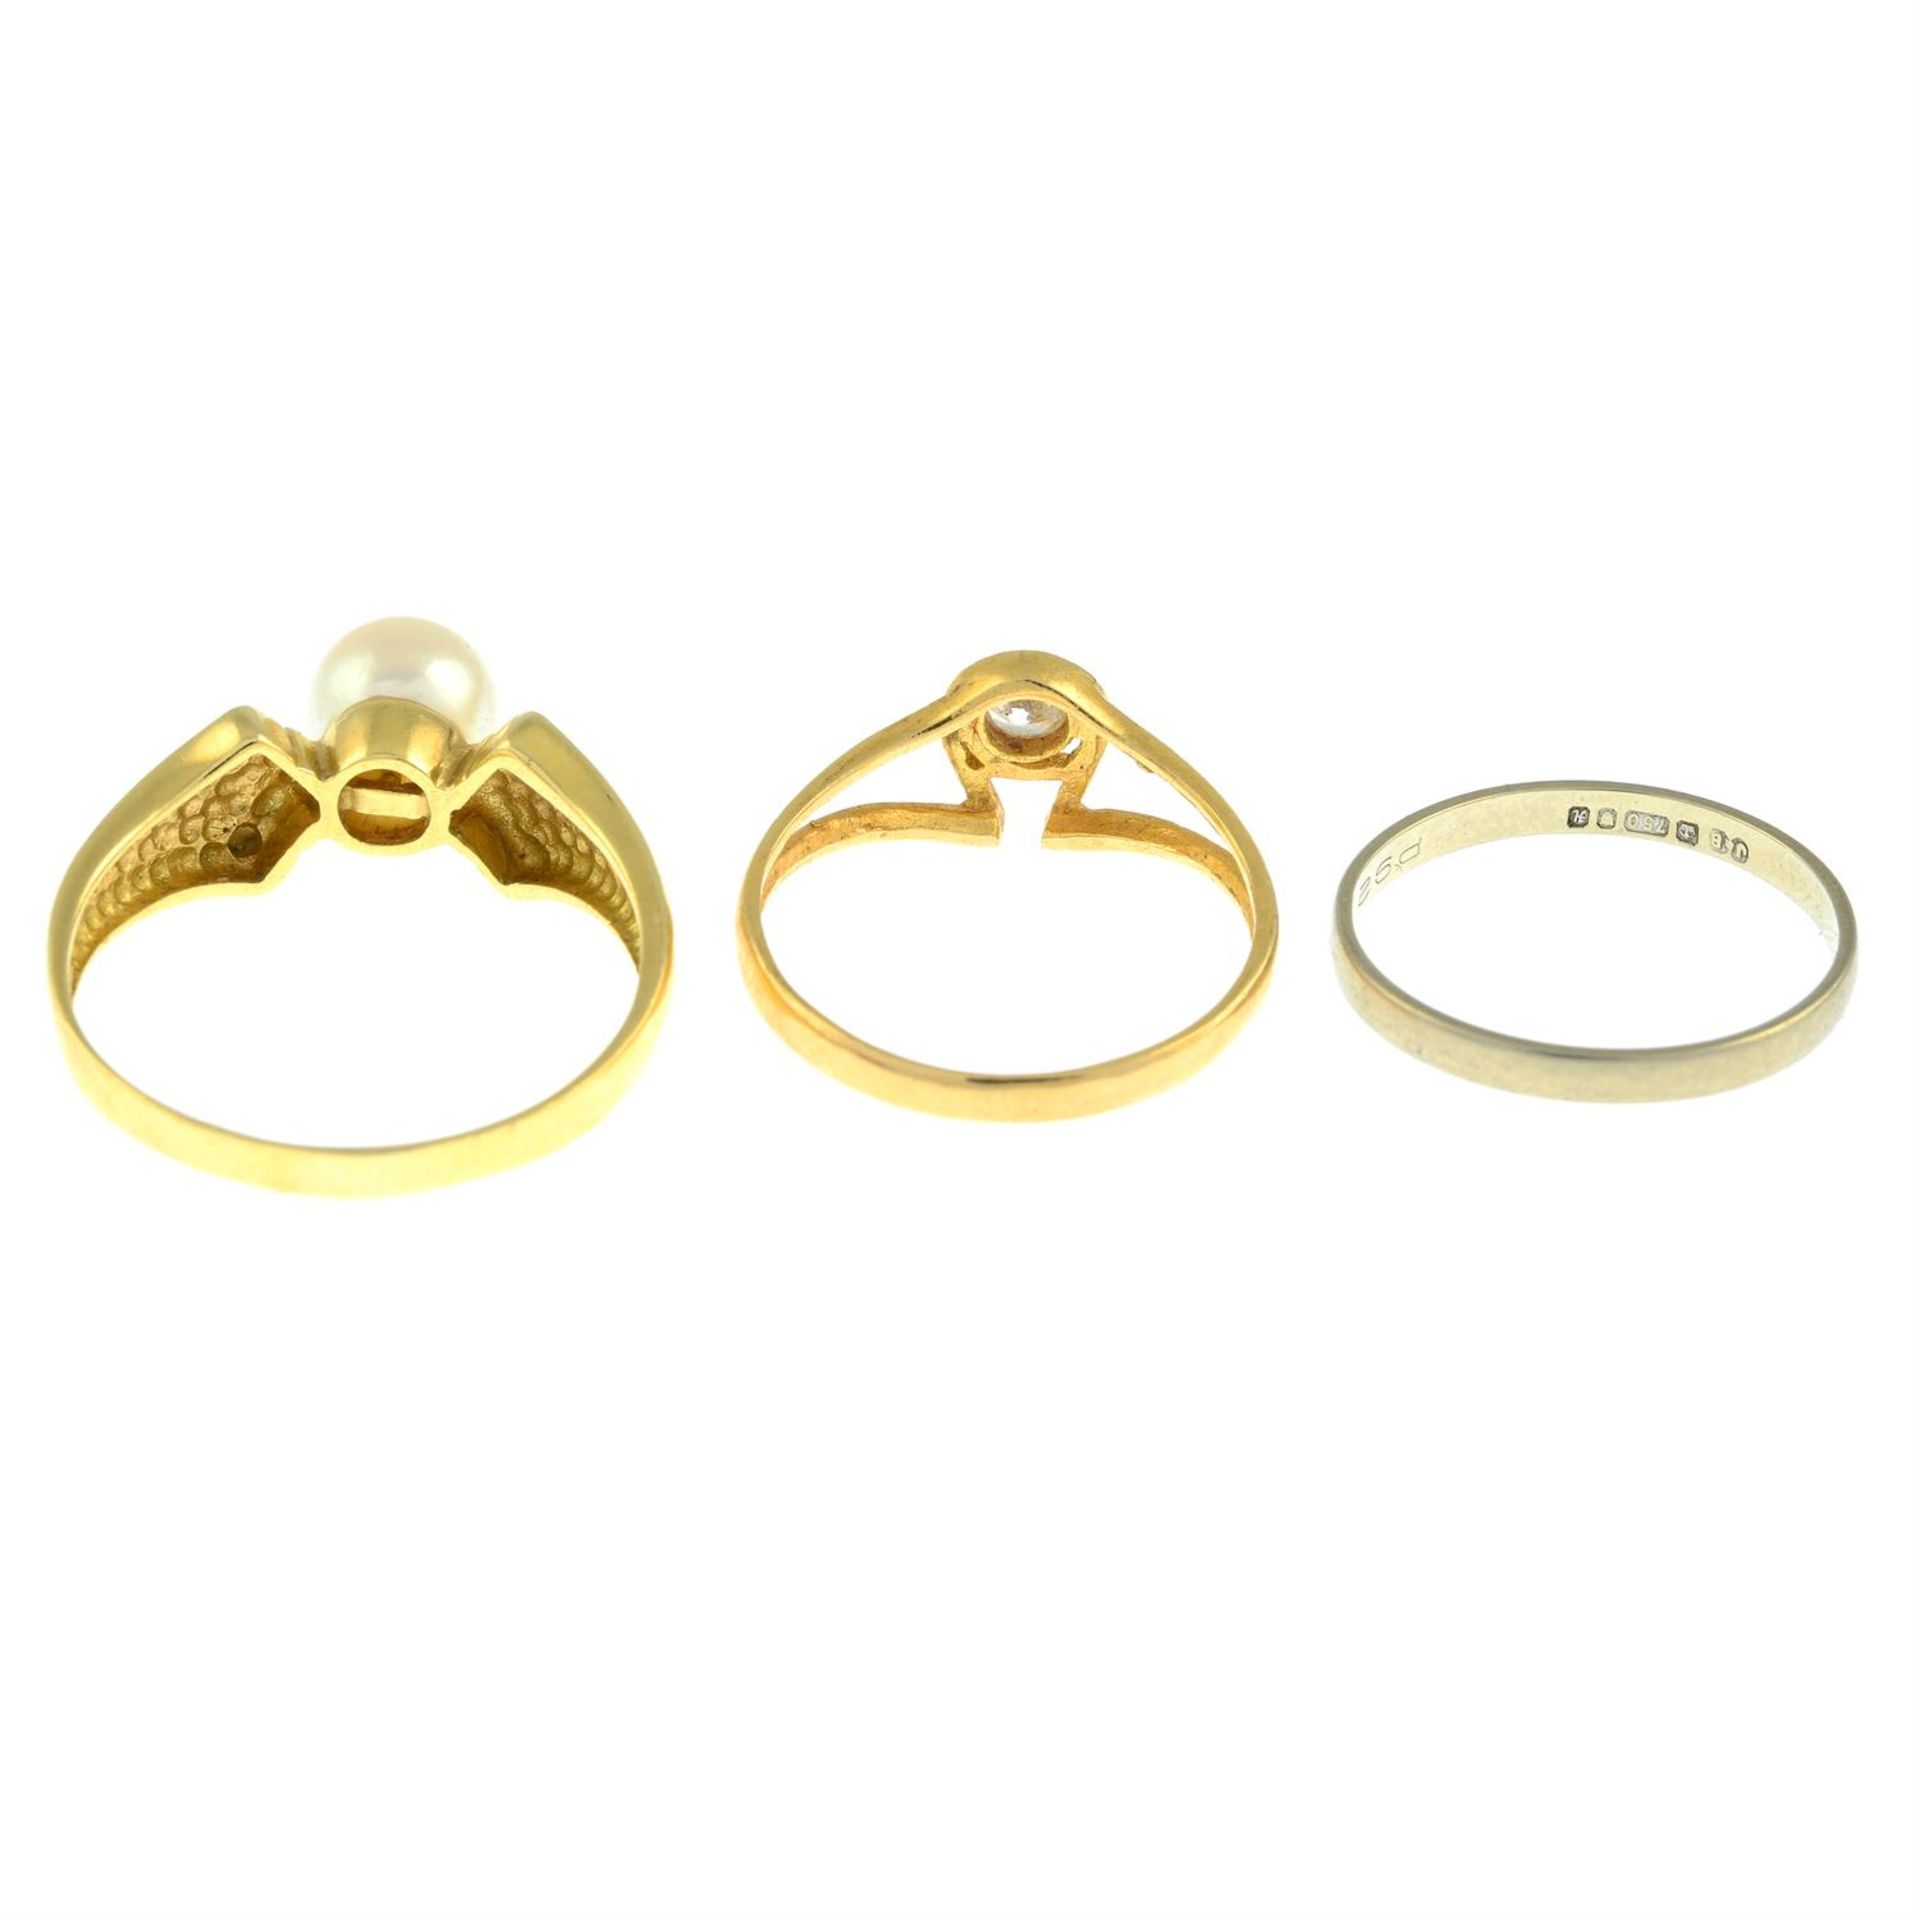 Three rings. - Image 2 of 2